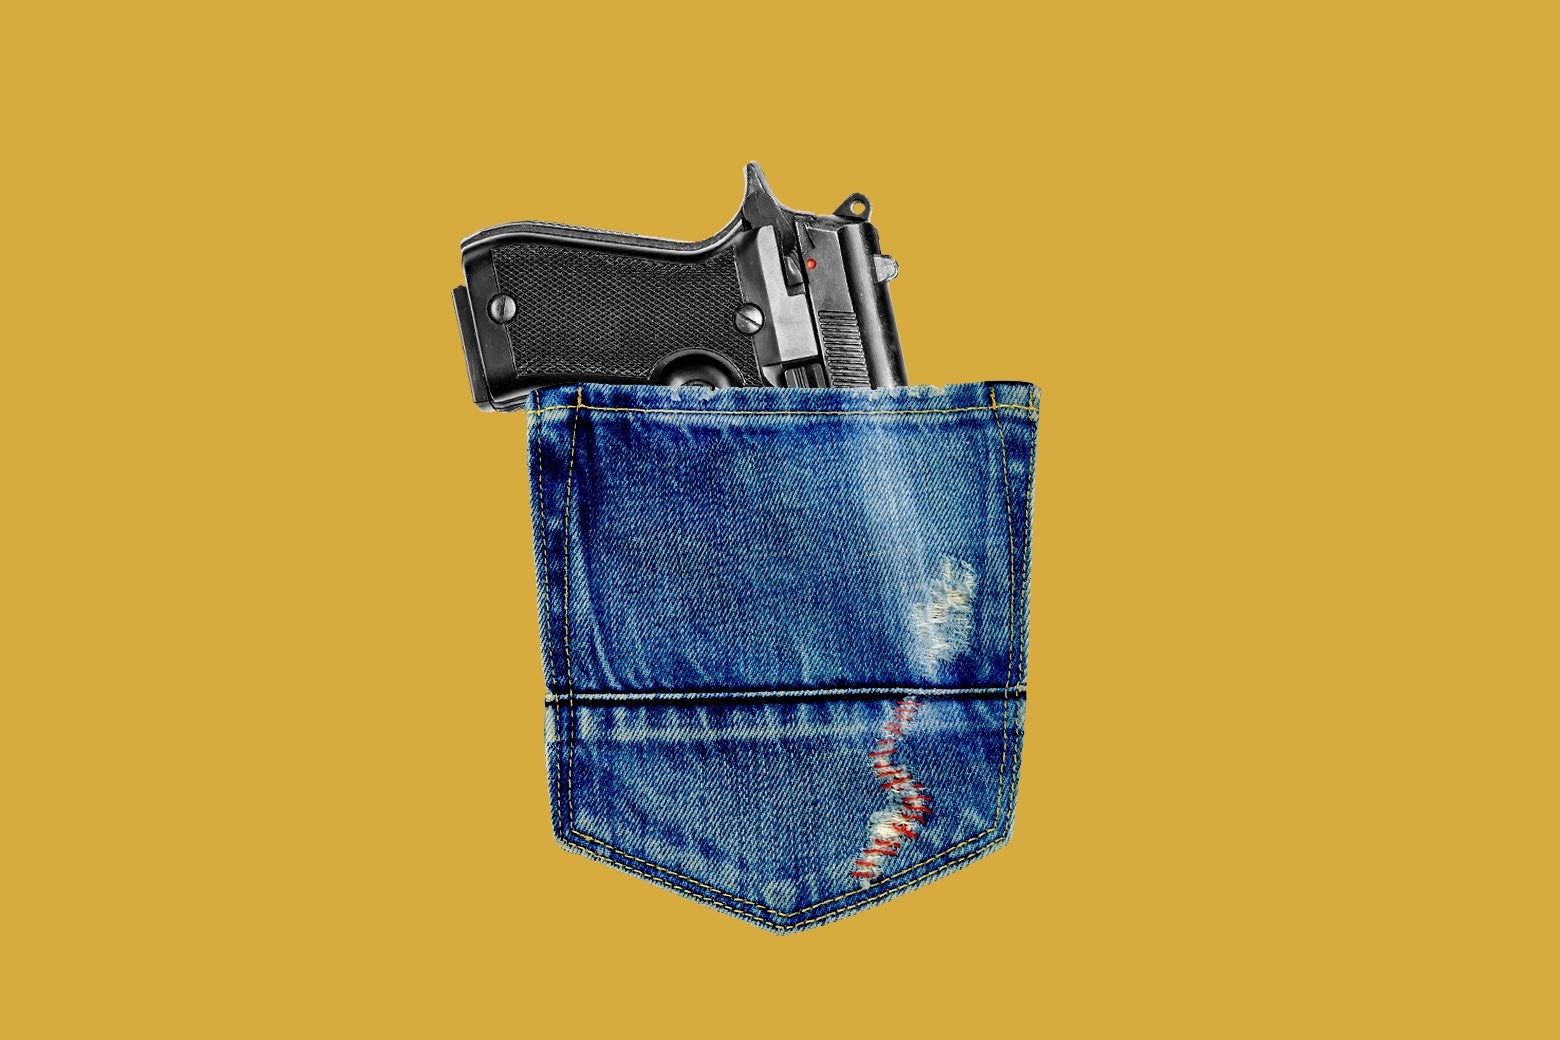 A handgun nestled in a denim pocket